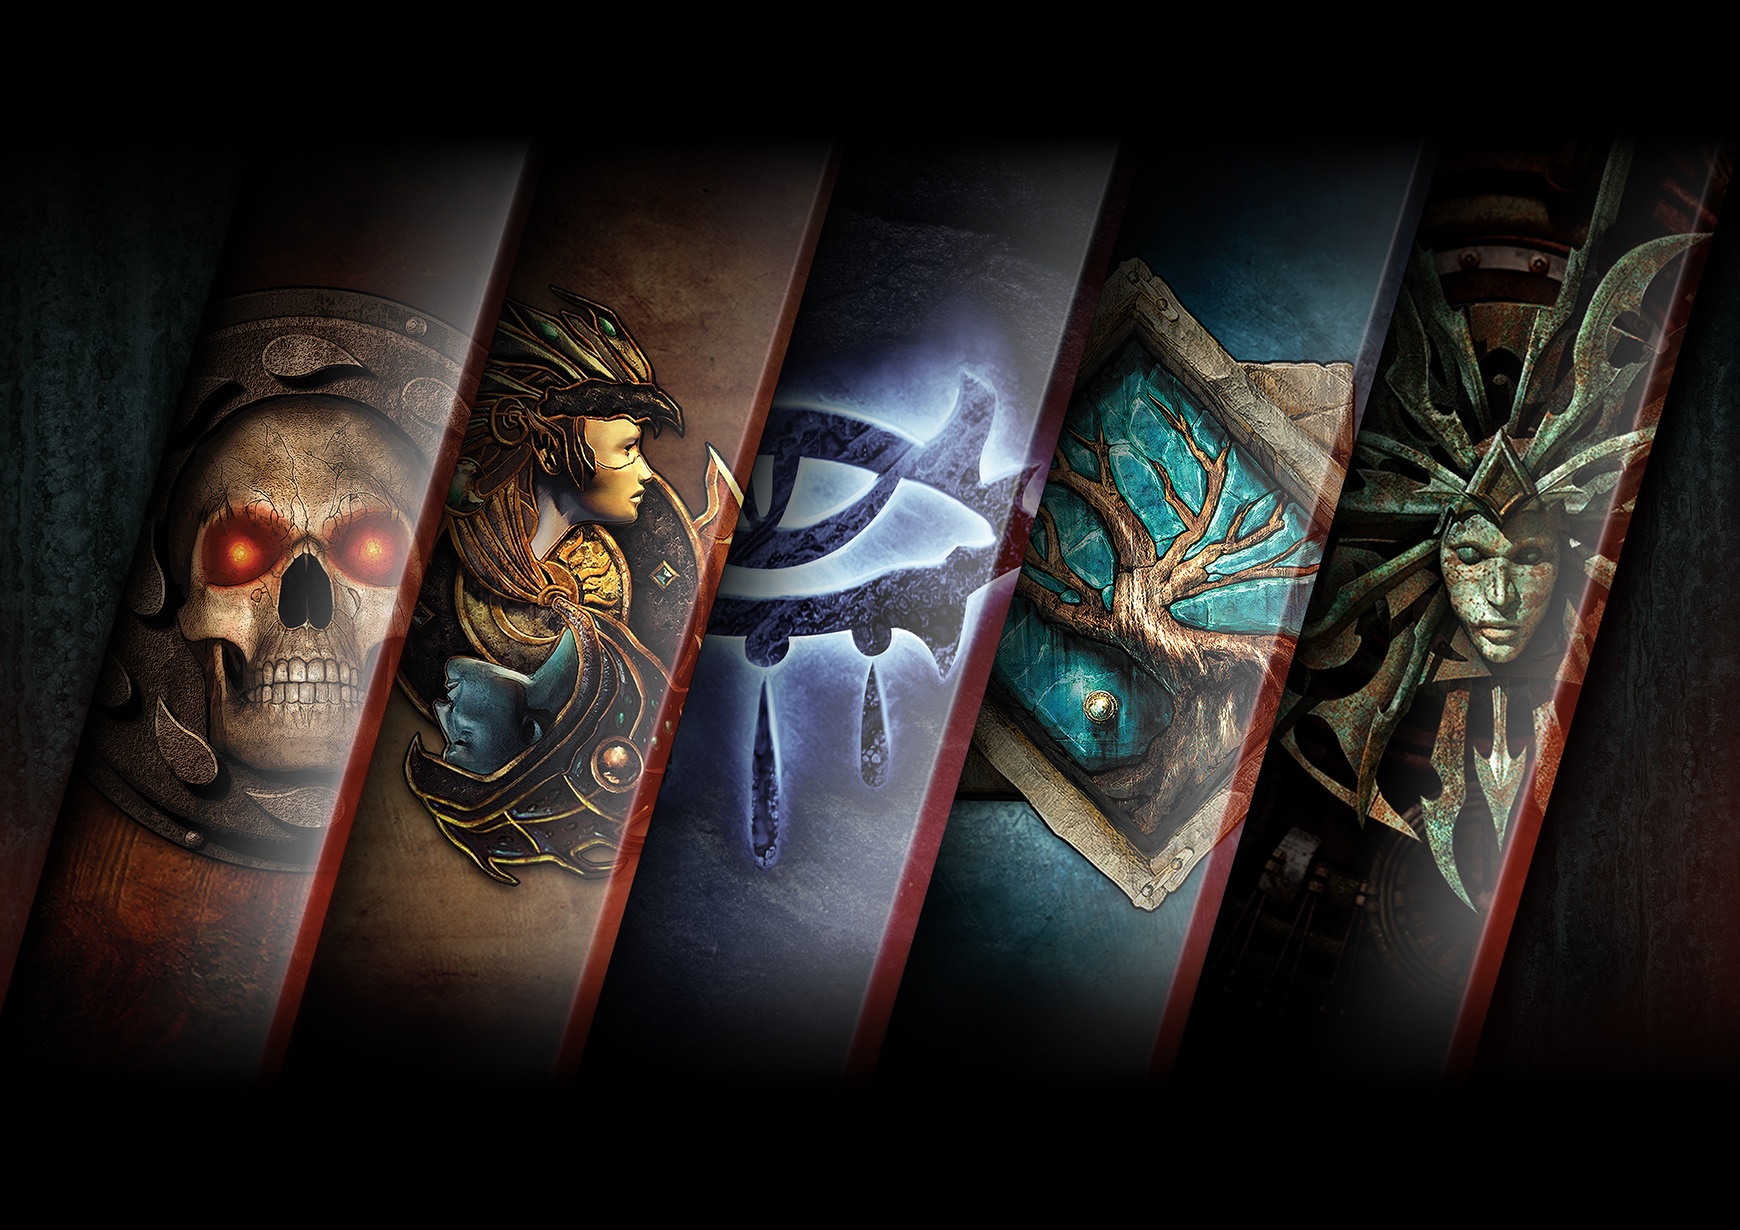 Fans di Dungeons & Dragons a raccolta, avvistate le Collector’s Packs di Baldur’s Gate, Planescape: Torment e Neverwinter Nights